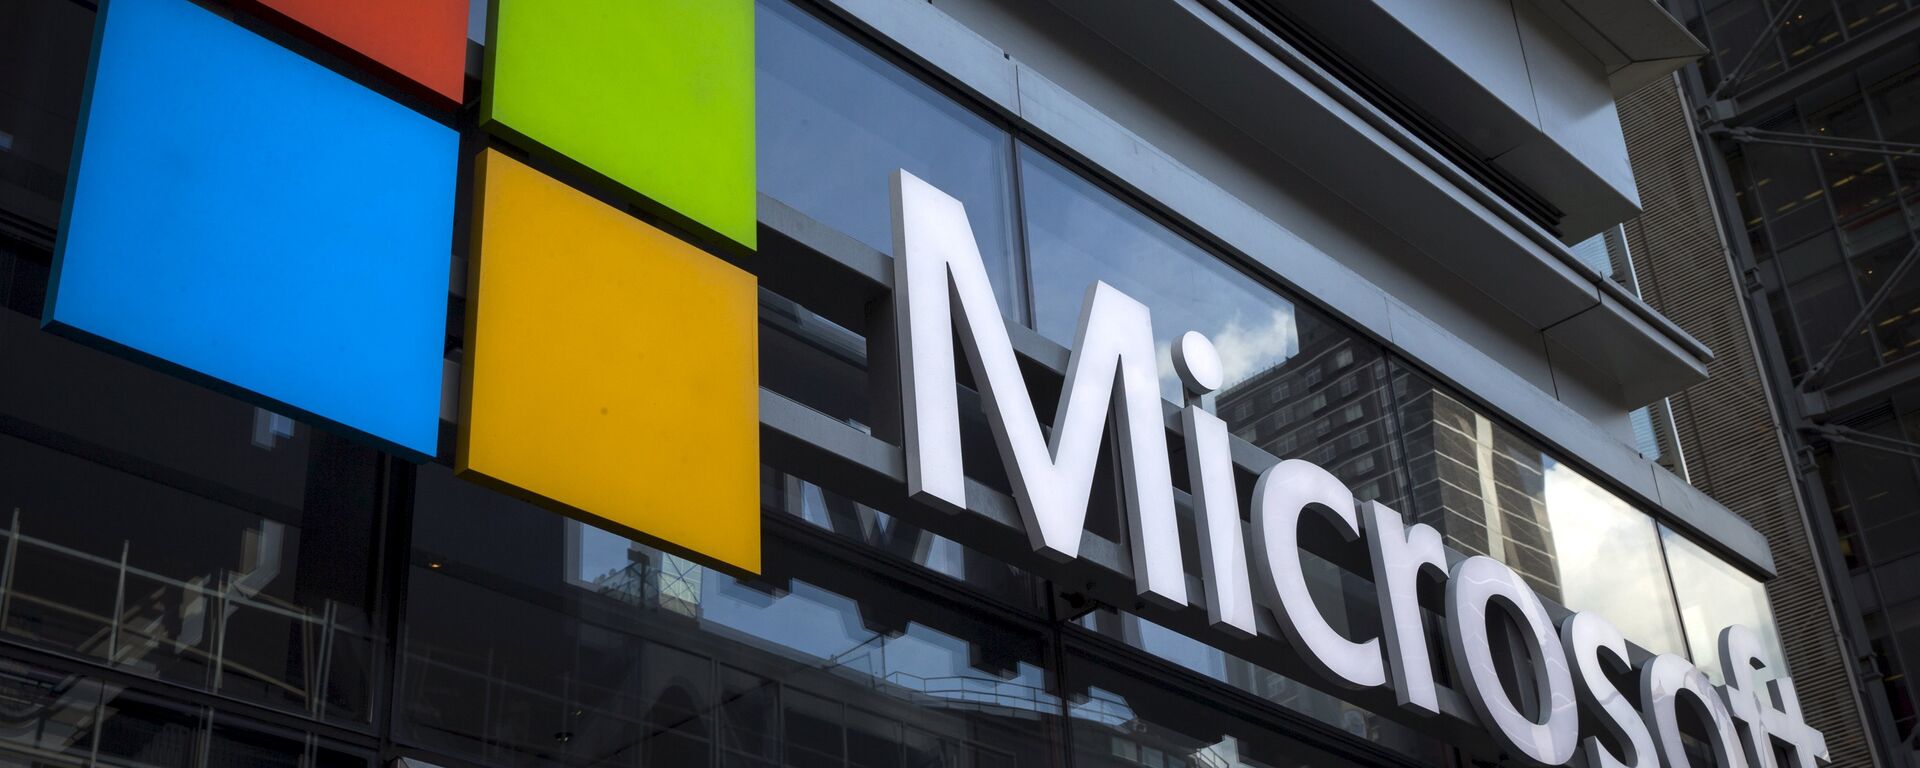 A Microsoft logo is seen on an office building in New York City, July 28, 2015 - Sputnik Mundo, 1920, 13.09.2021